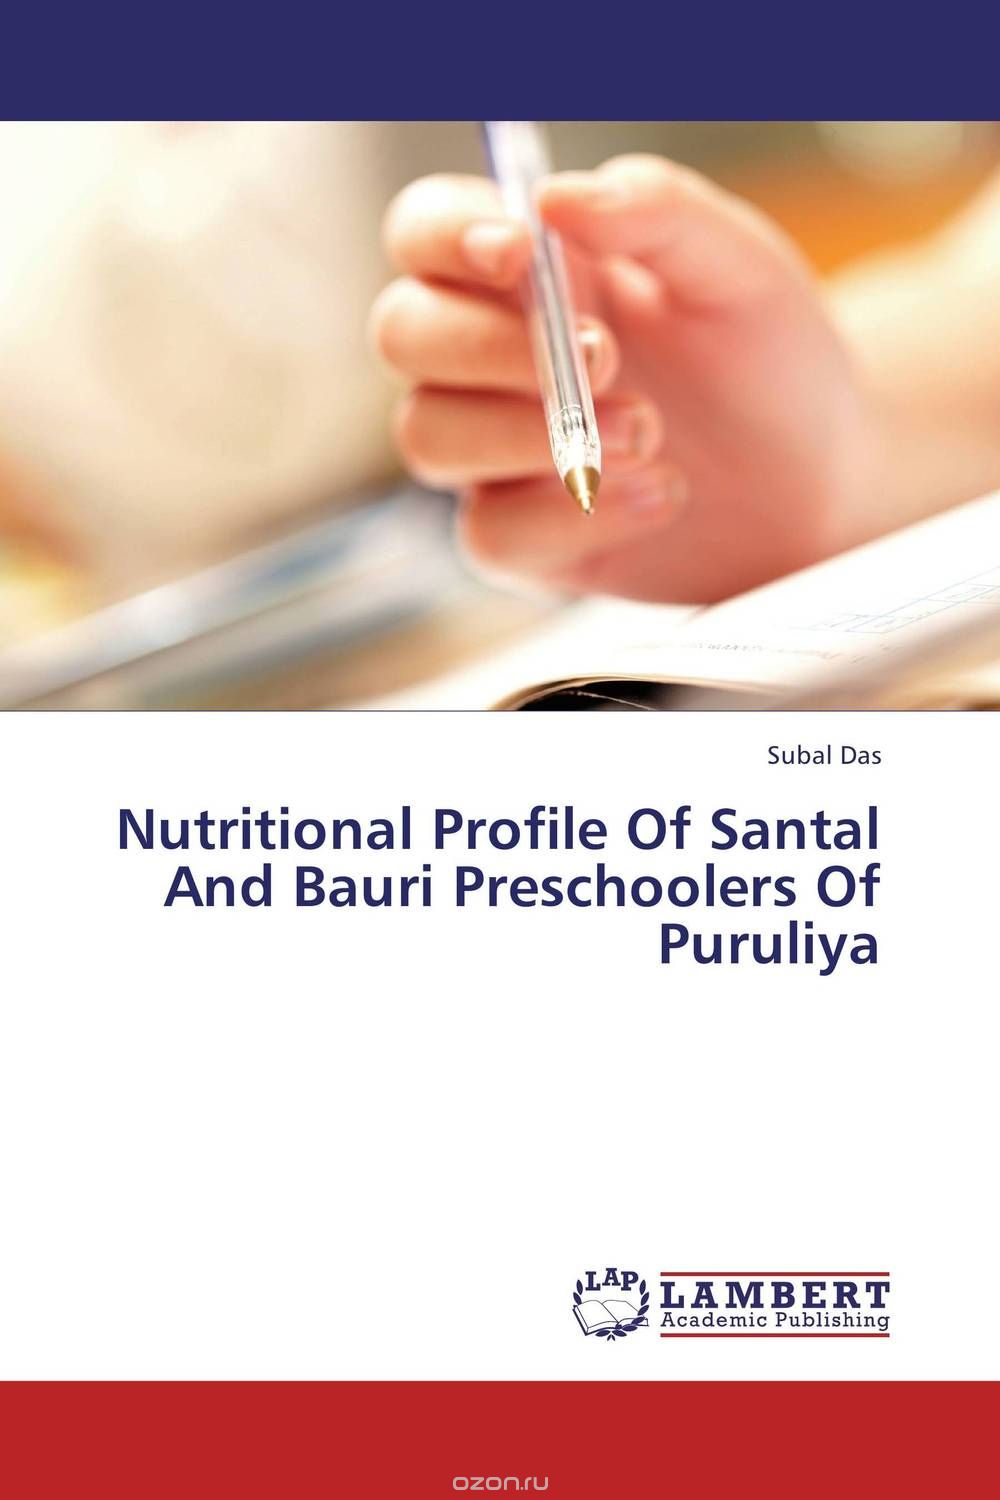 Скачать книгу "Nutritional Profile Of Santal And Bauri Preschoolers Of Puruliya"